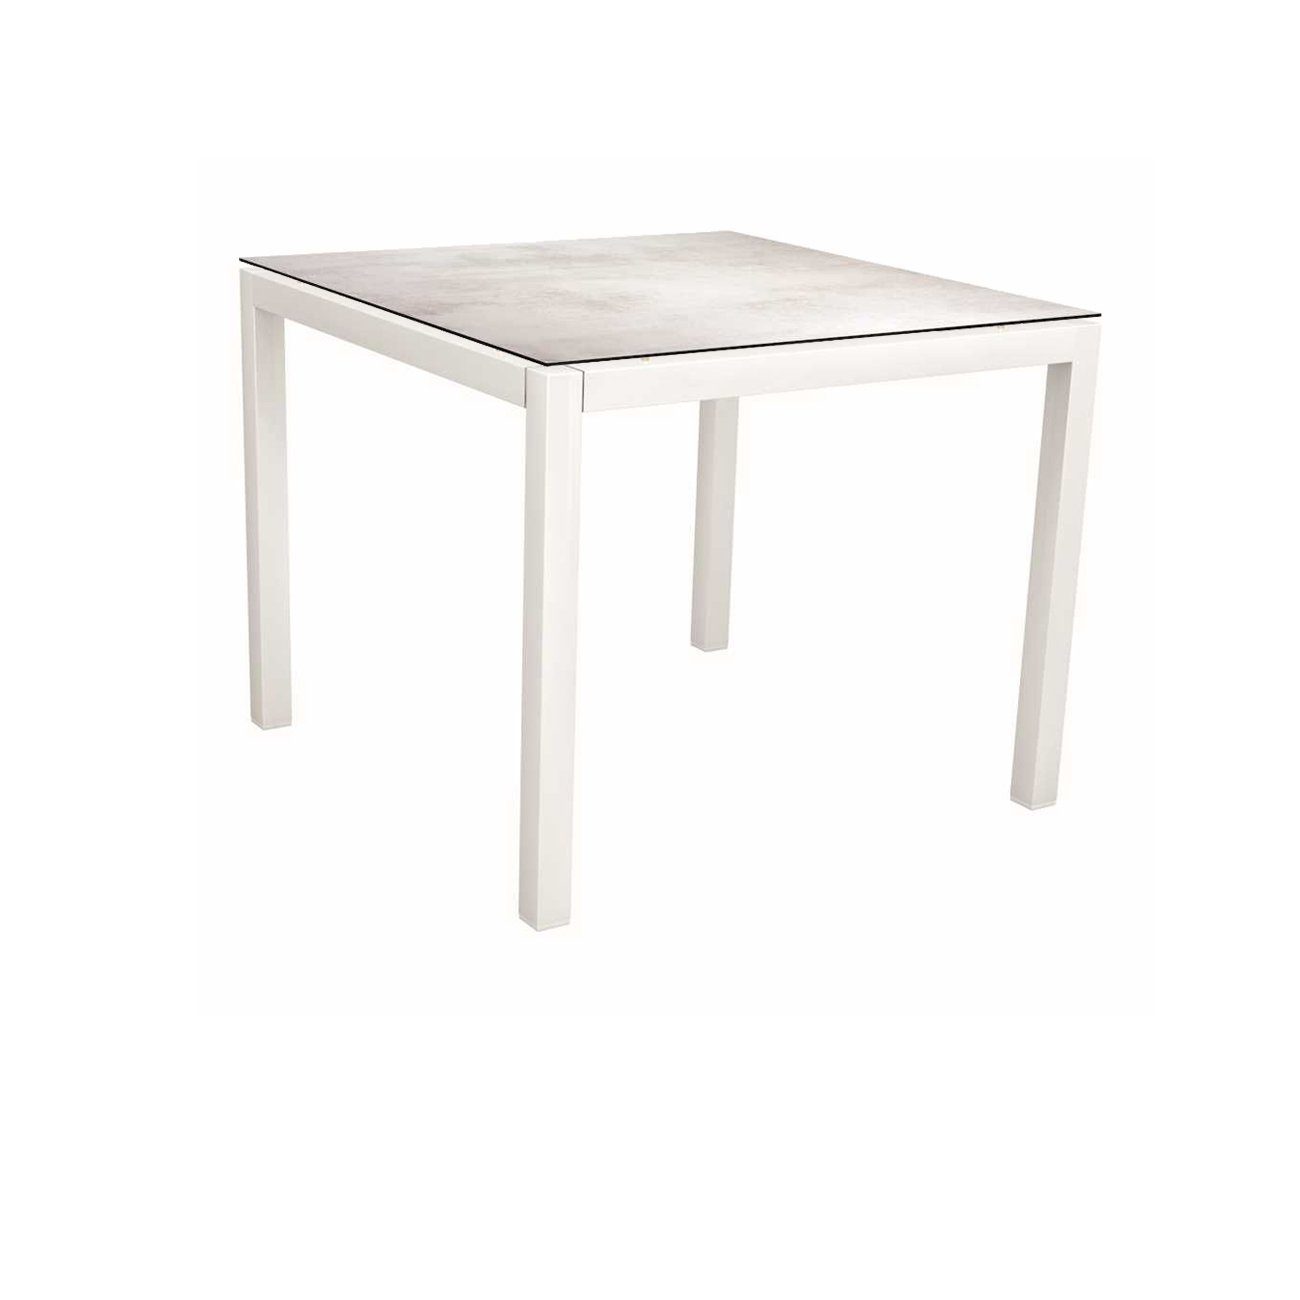 Stern Tischsystem, Gestell Aluminium weiß, Tischplatte HPL Zement hell, Größe: 80x80 cm